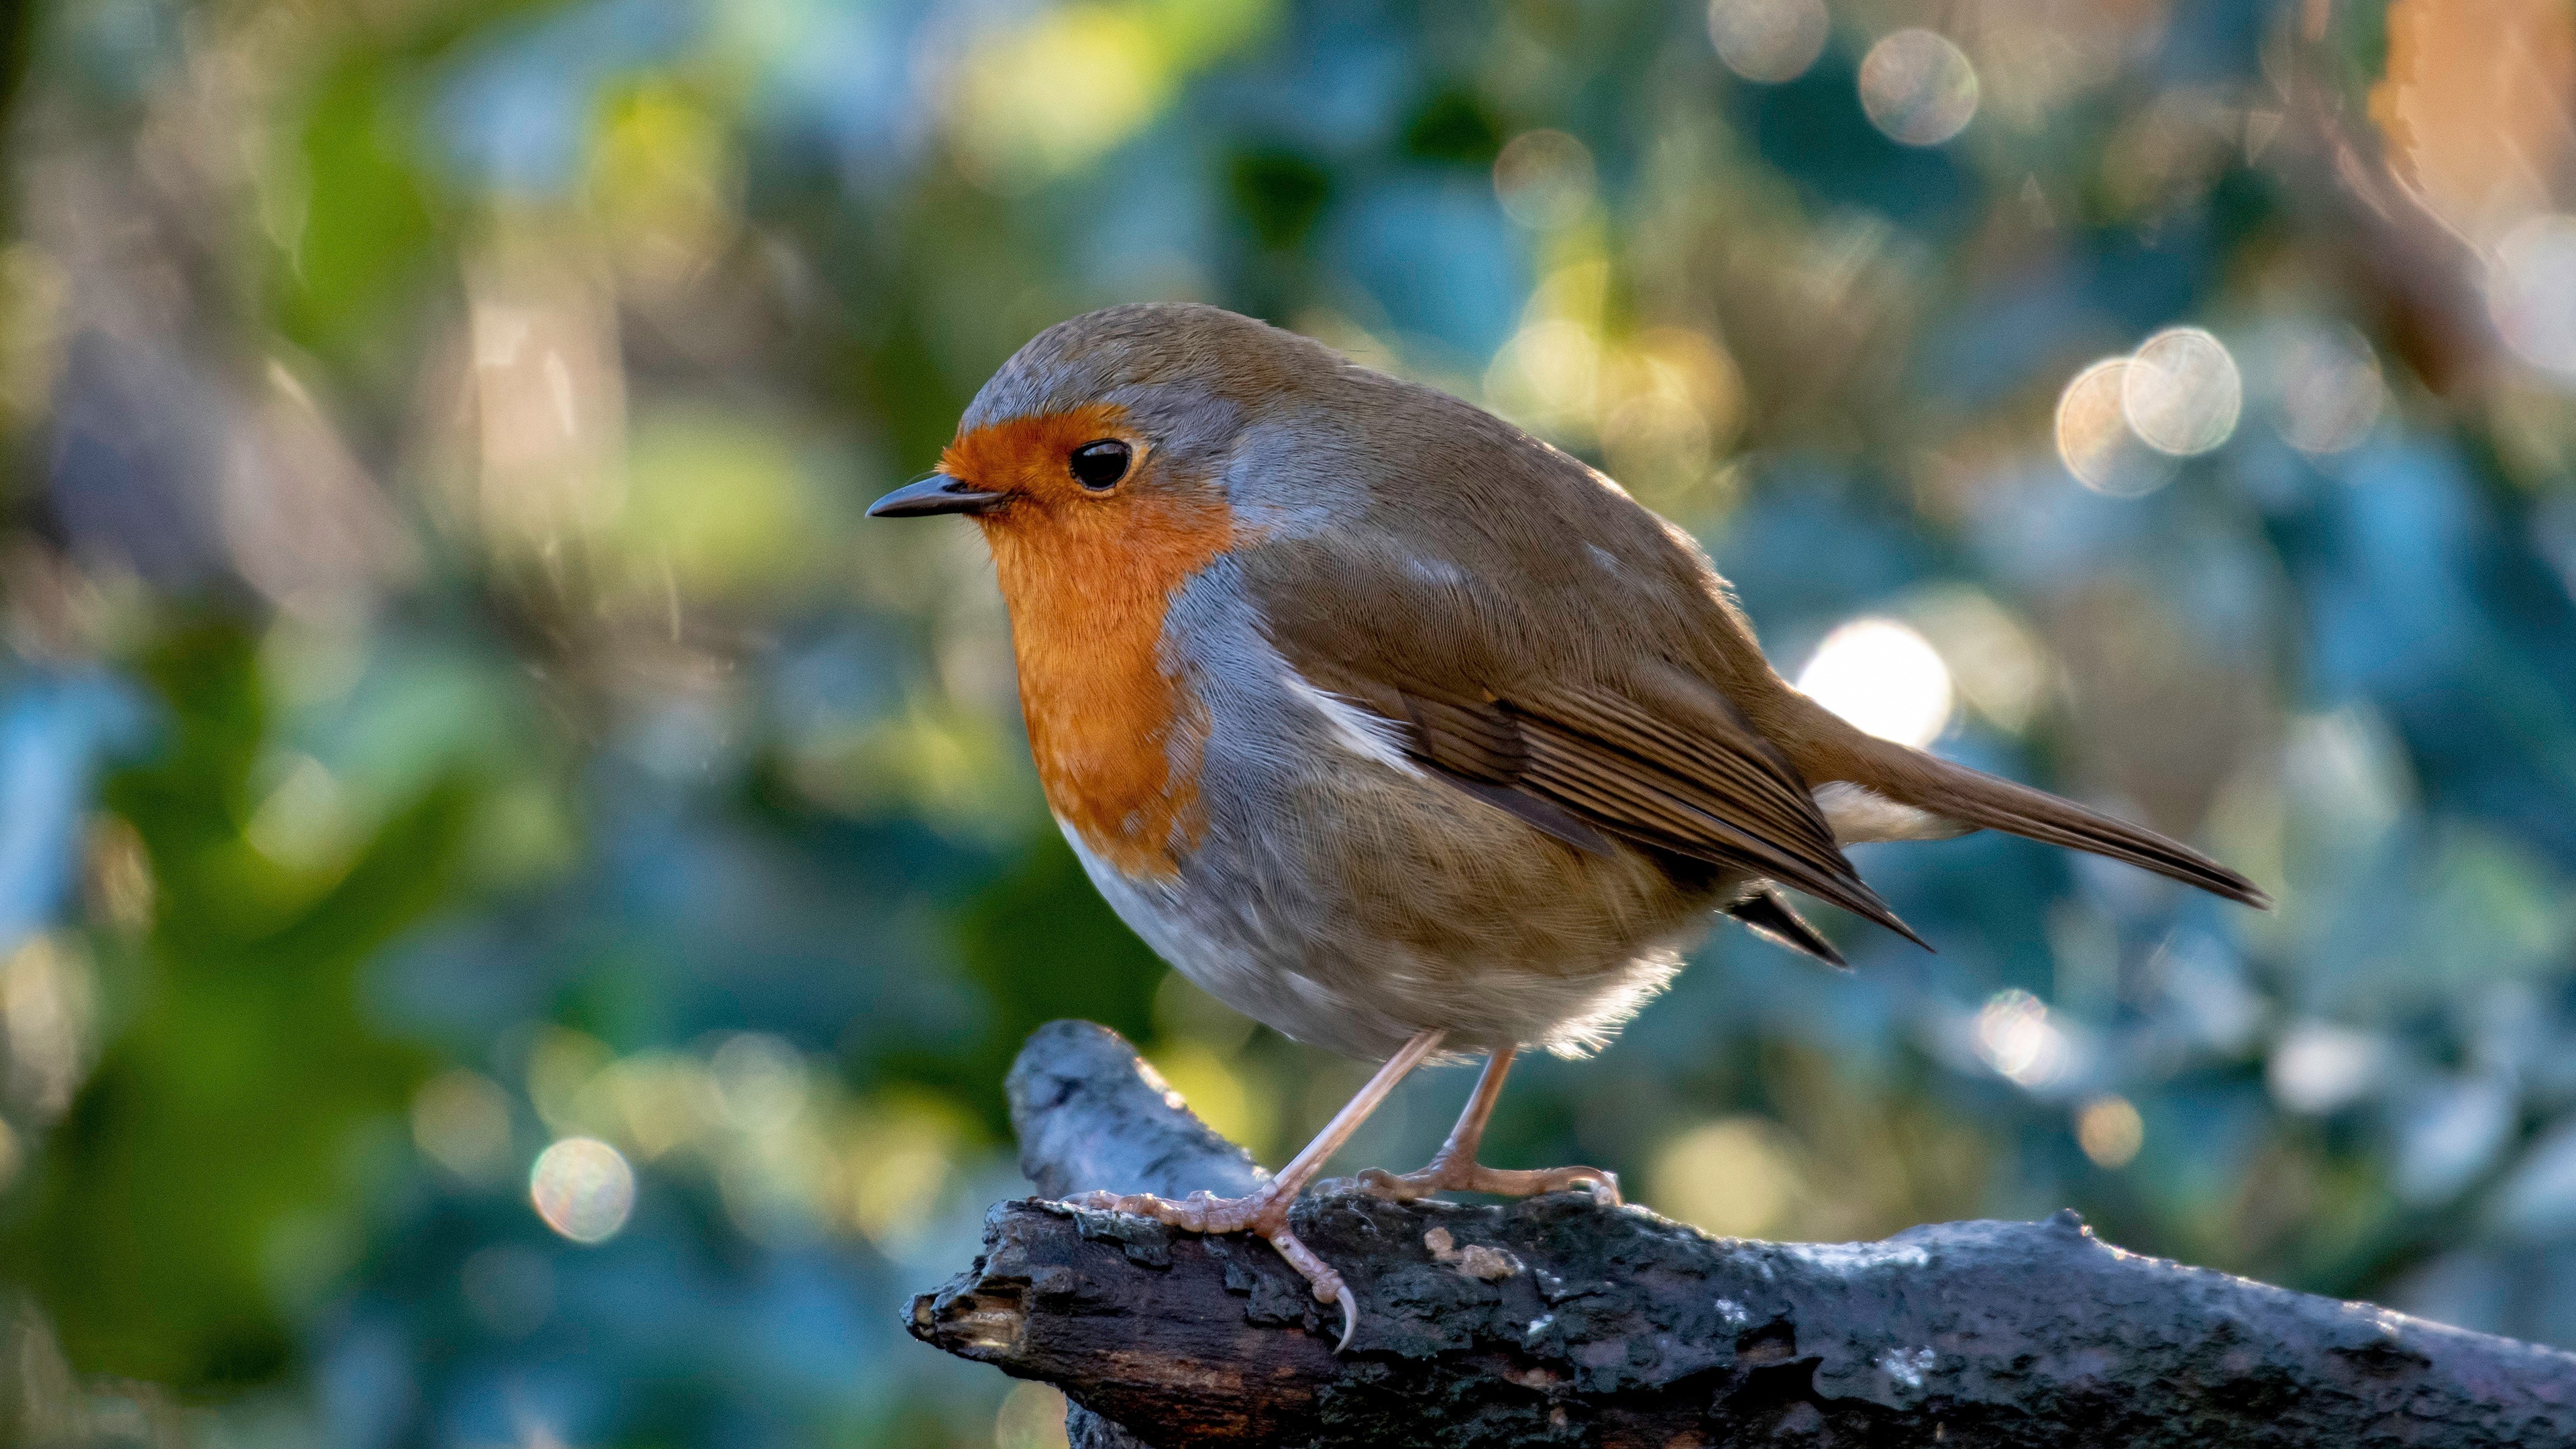 Robin bird in 4K, Ultra HD quality, Stunning visuals, Feathery beauty, 3840x2160 4K Desktop